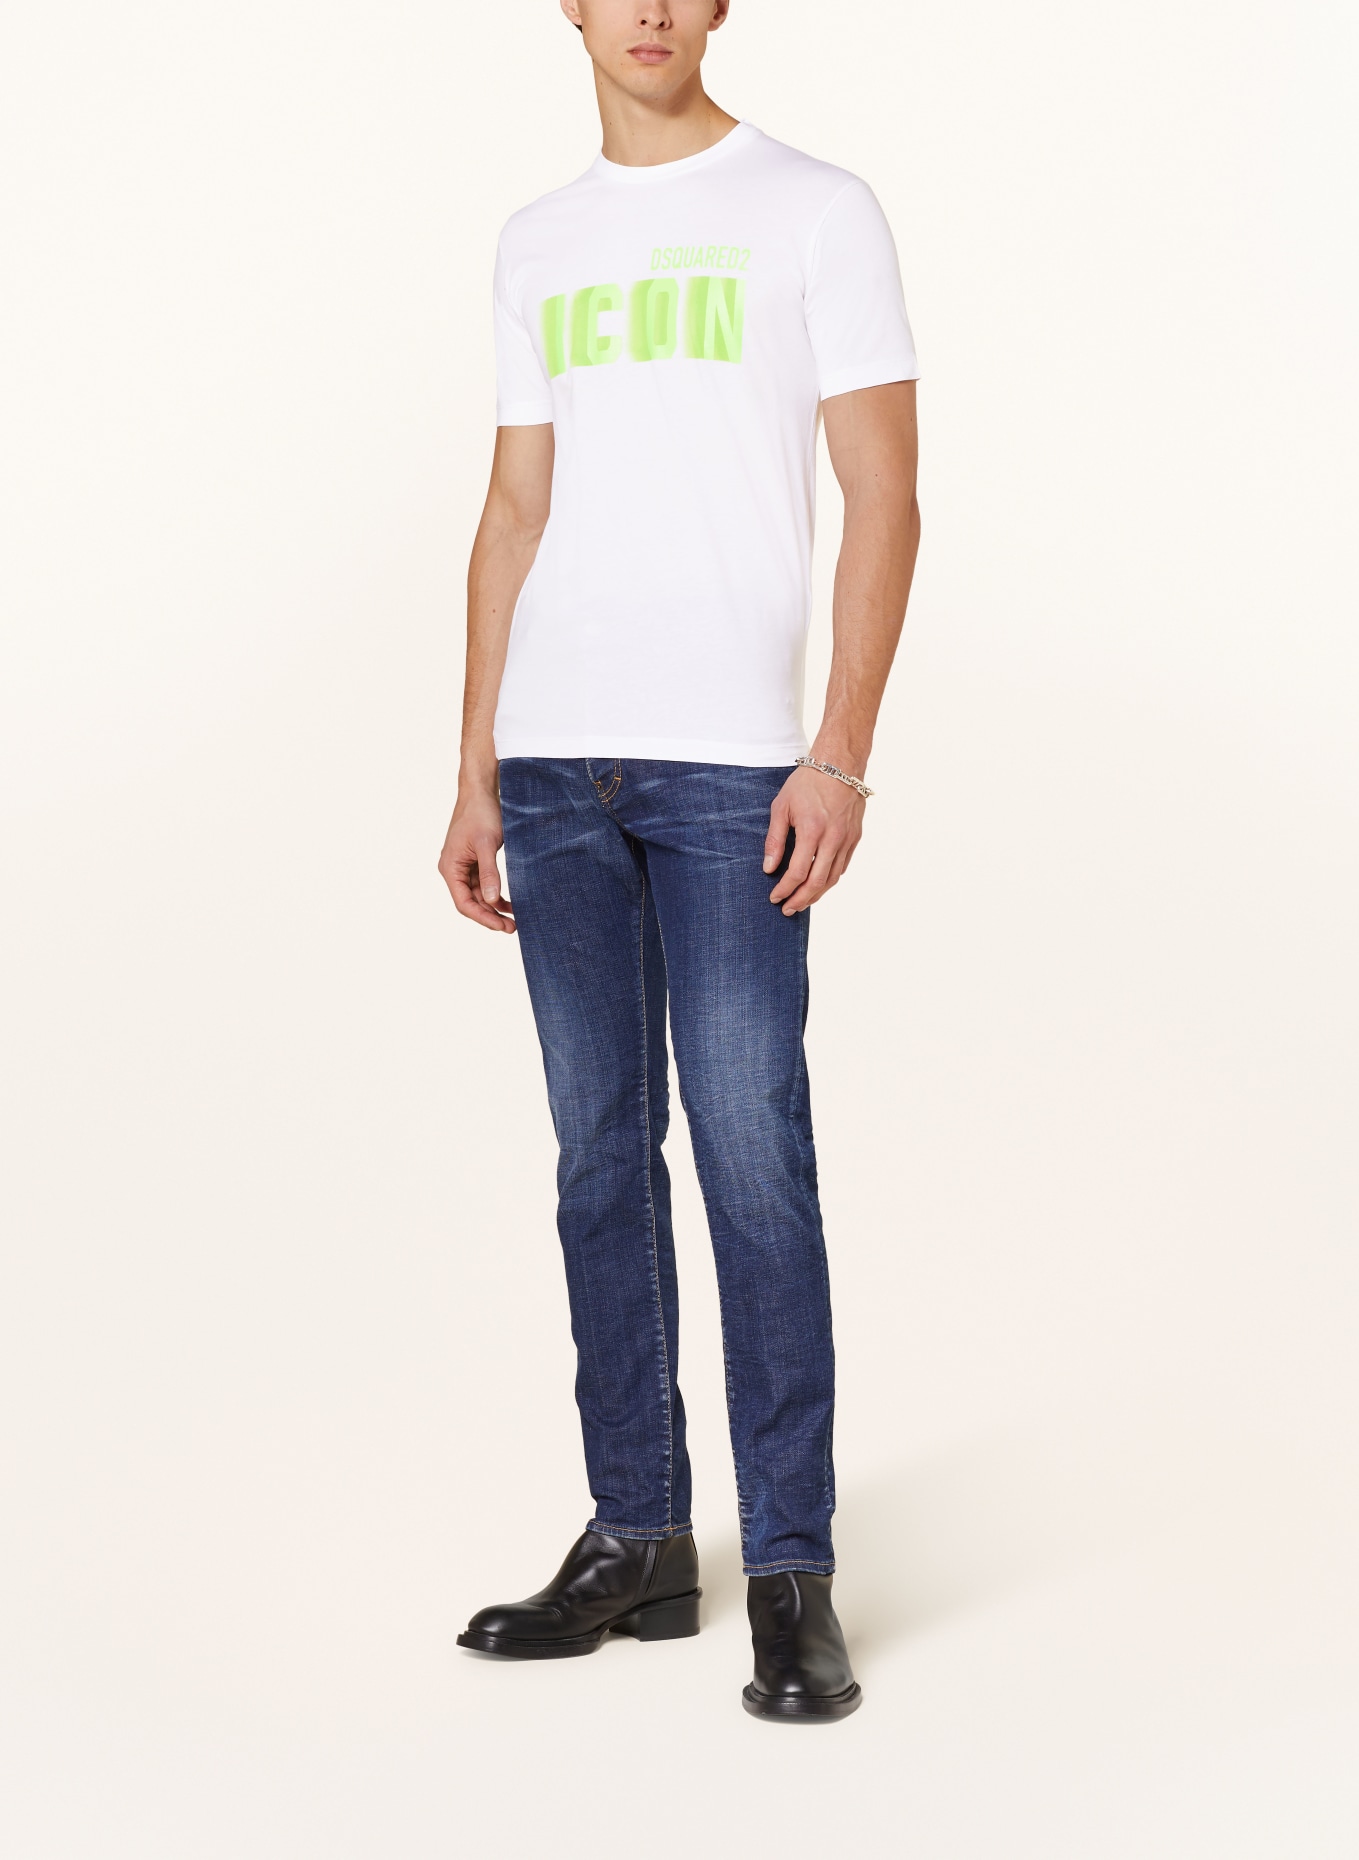 DSQUARED2 T-Shirt ICON, Farbe: WEISS/ NEONGRÜN (Bild 2)